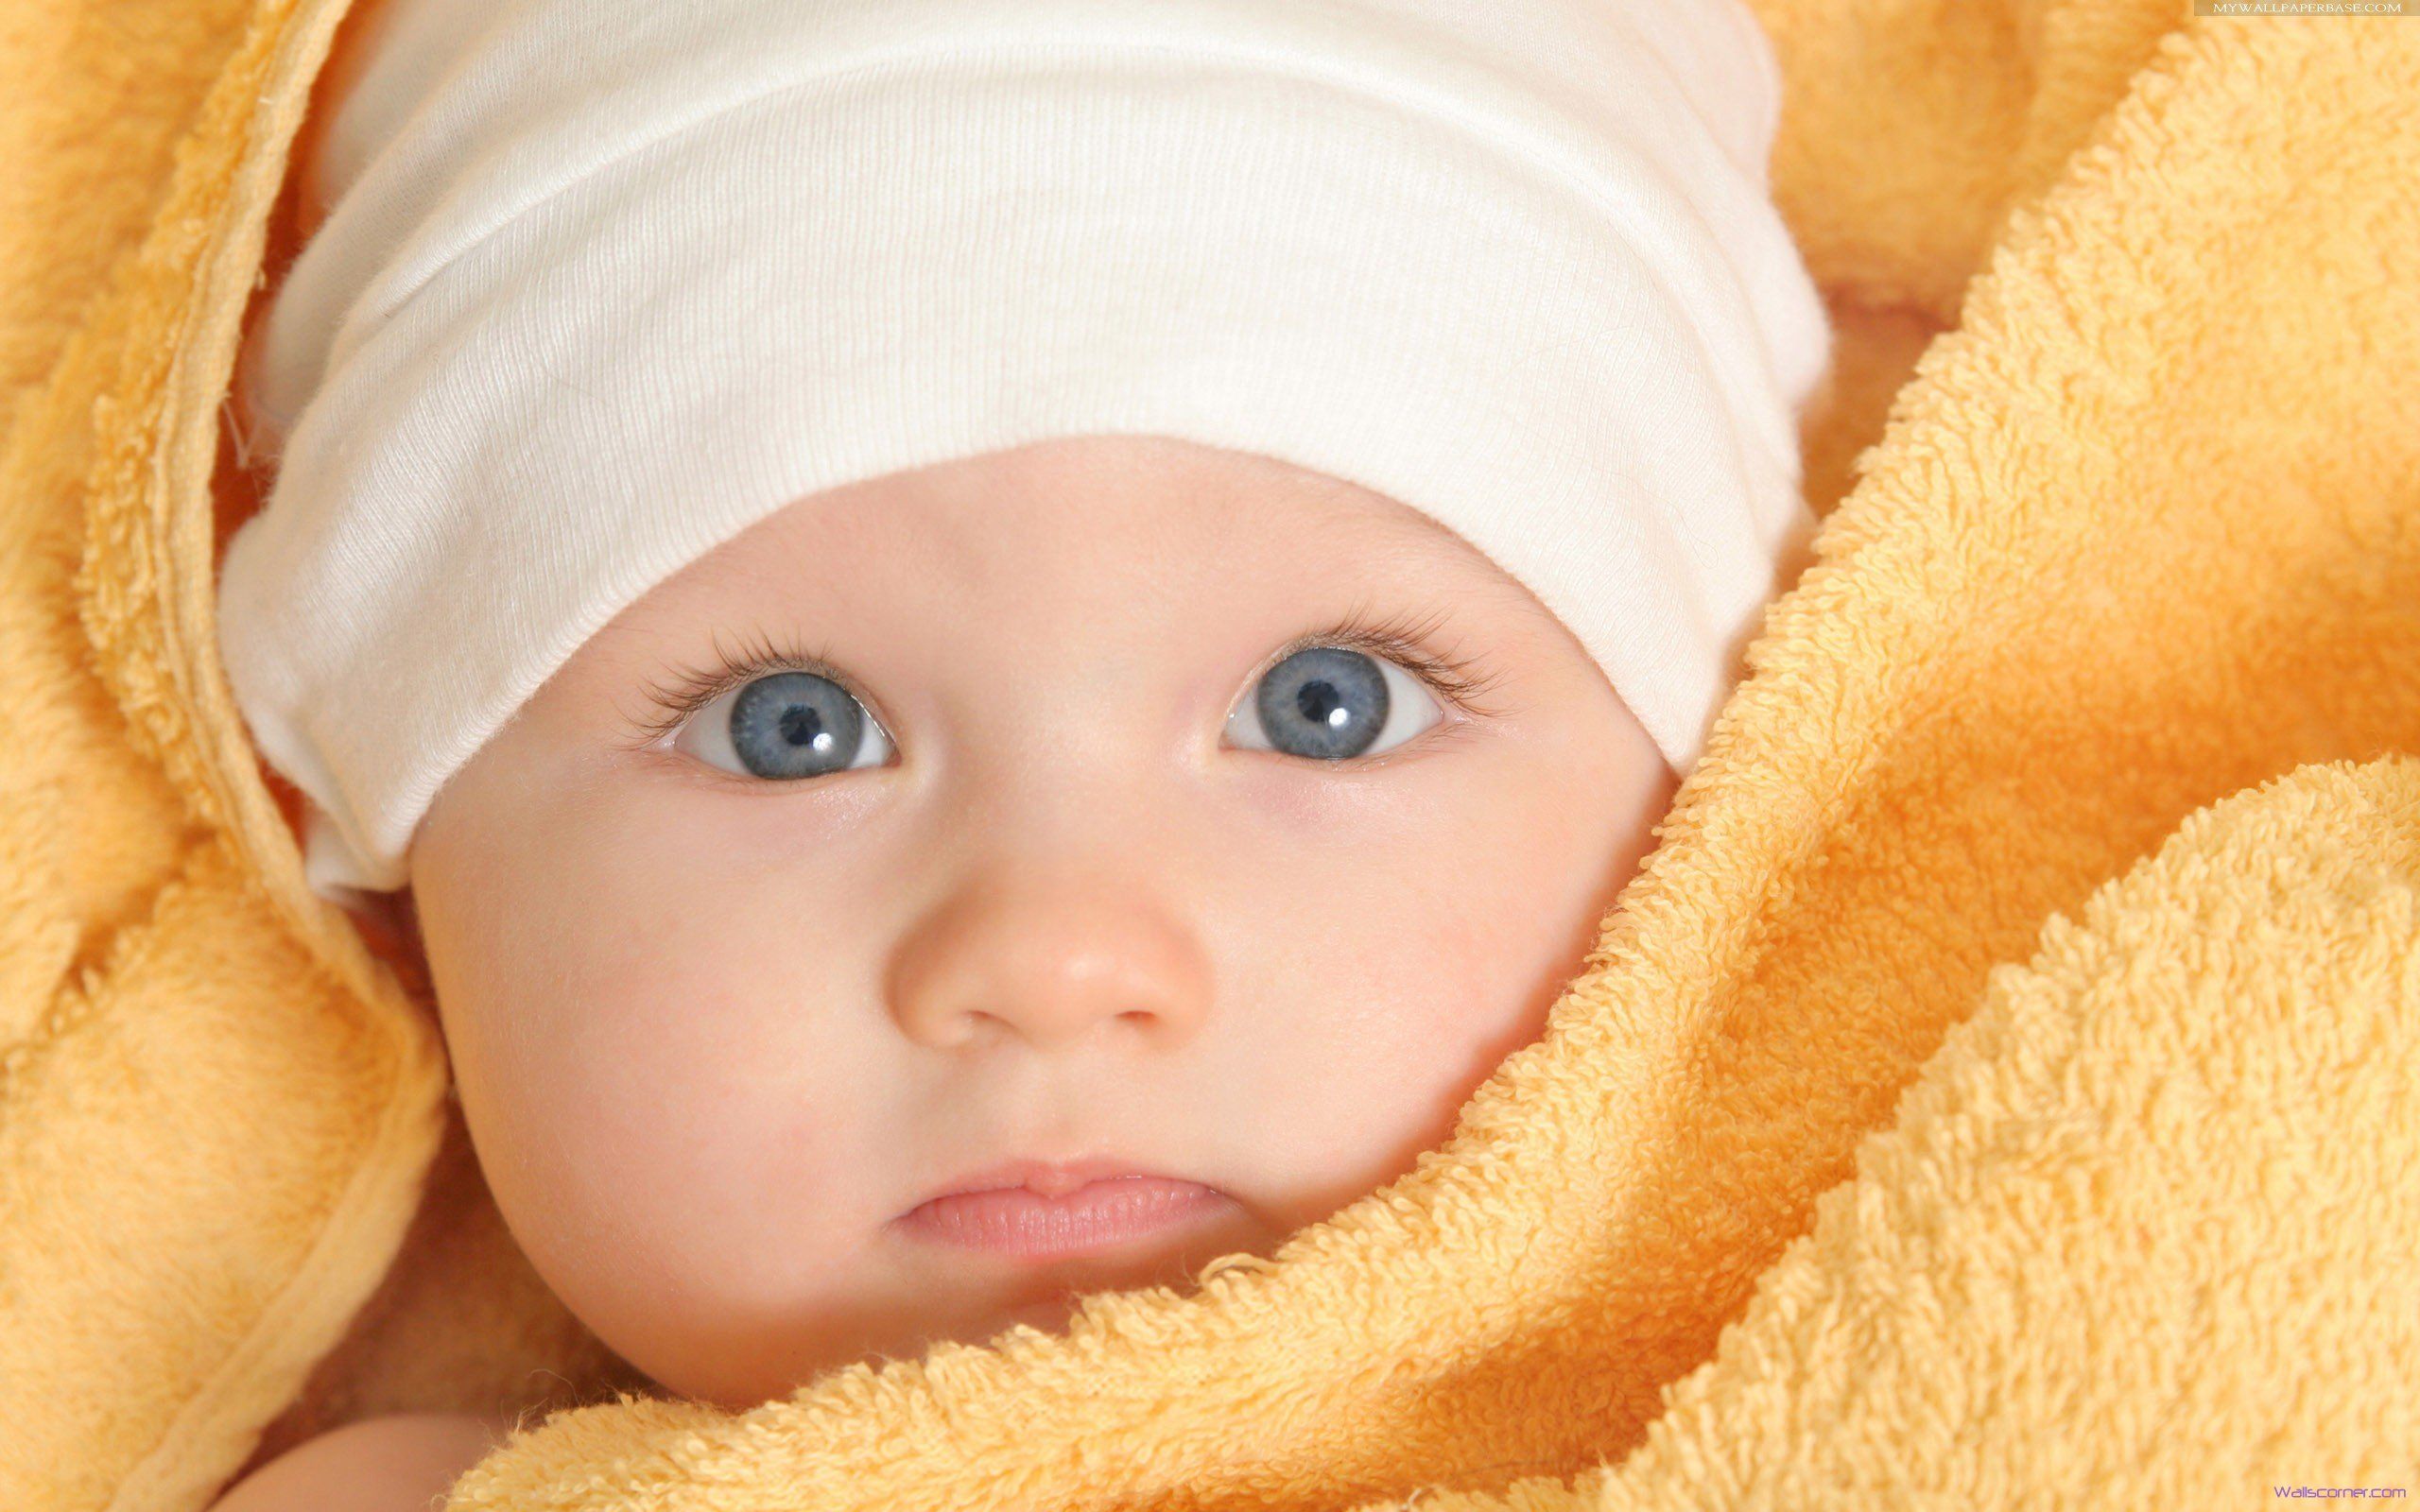 Cute newborn baby HD Wallpaper. Cute baby wallpaper, Cute baby